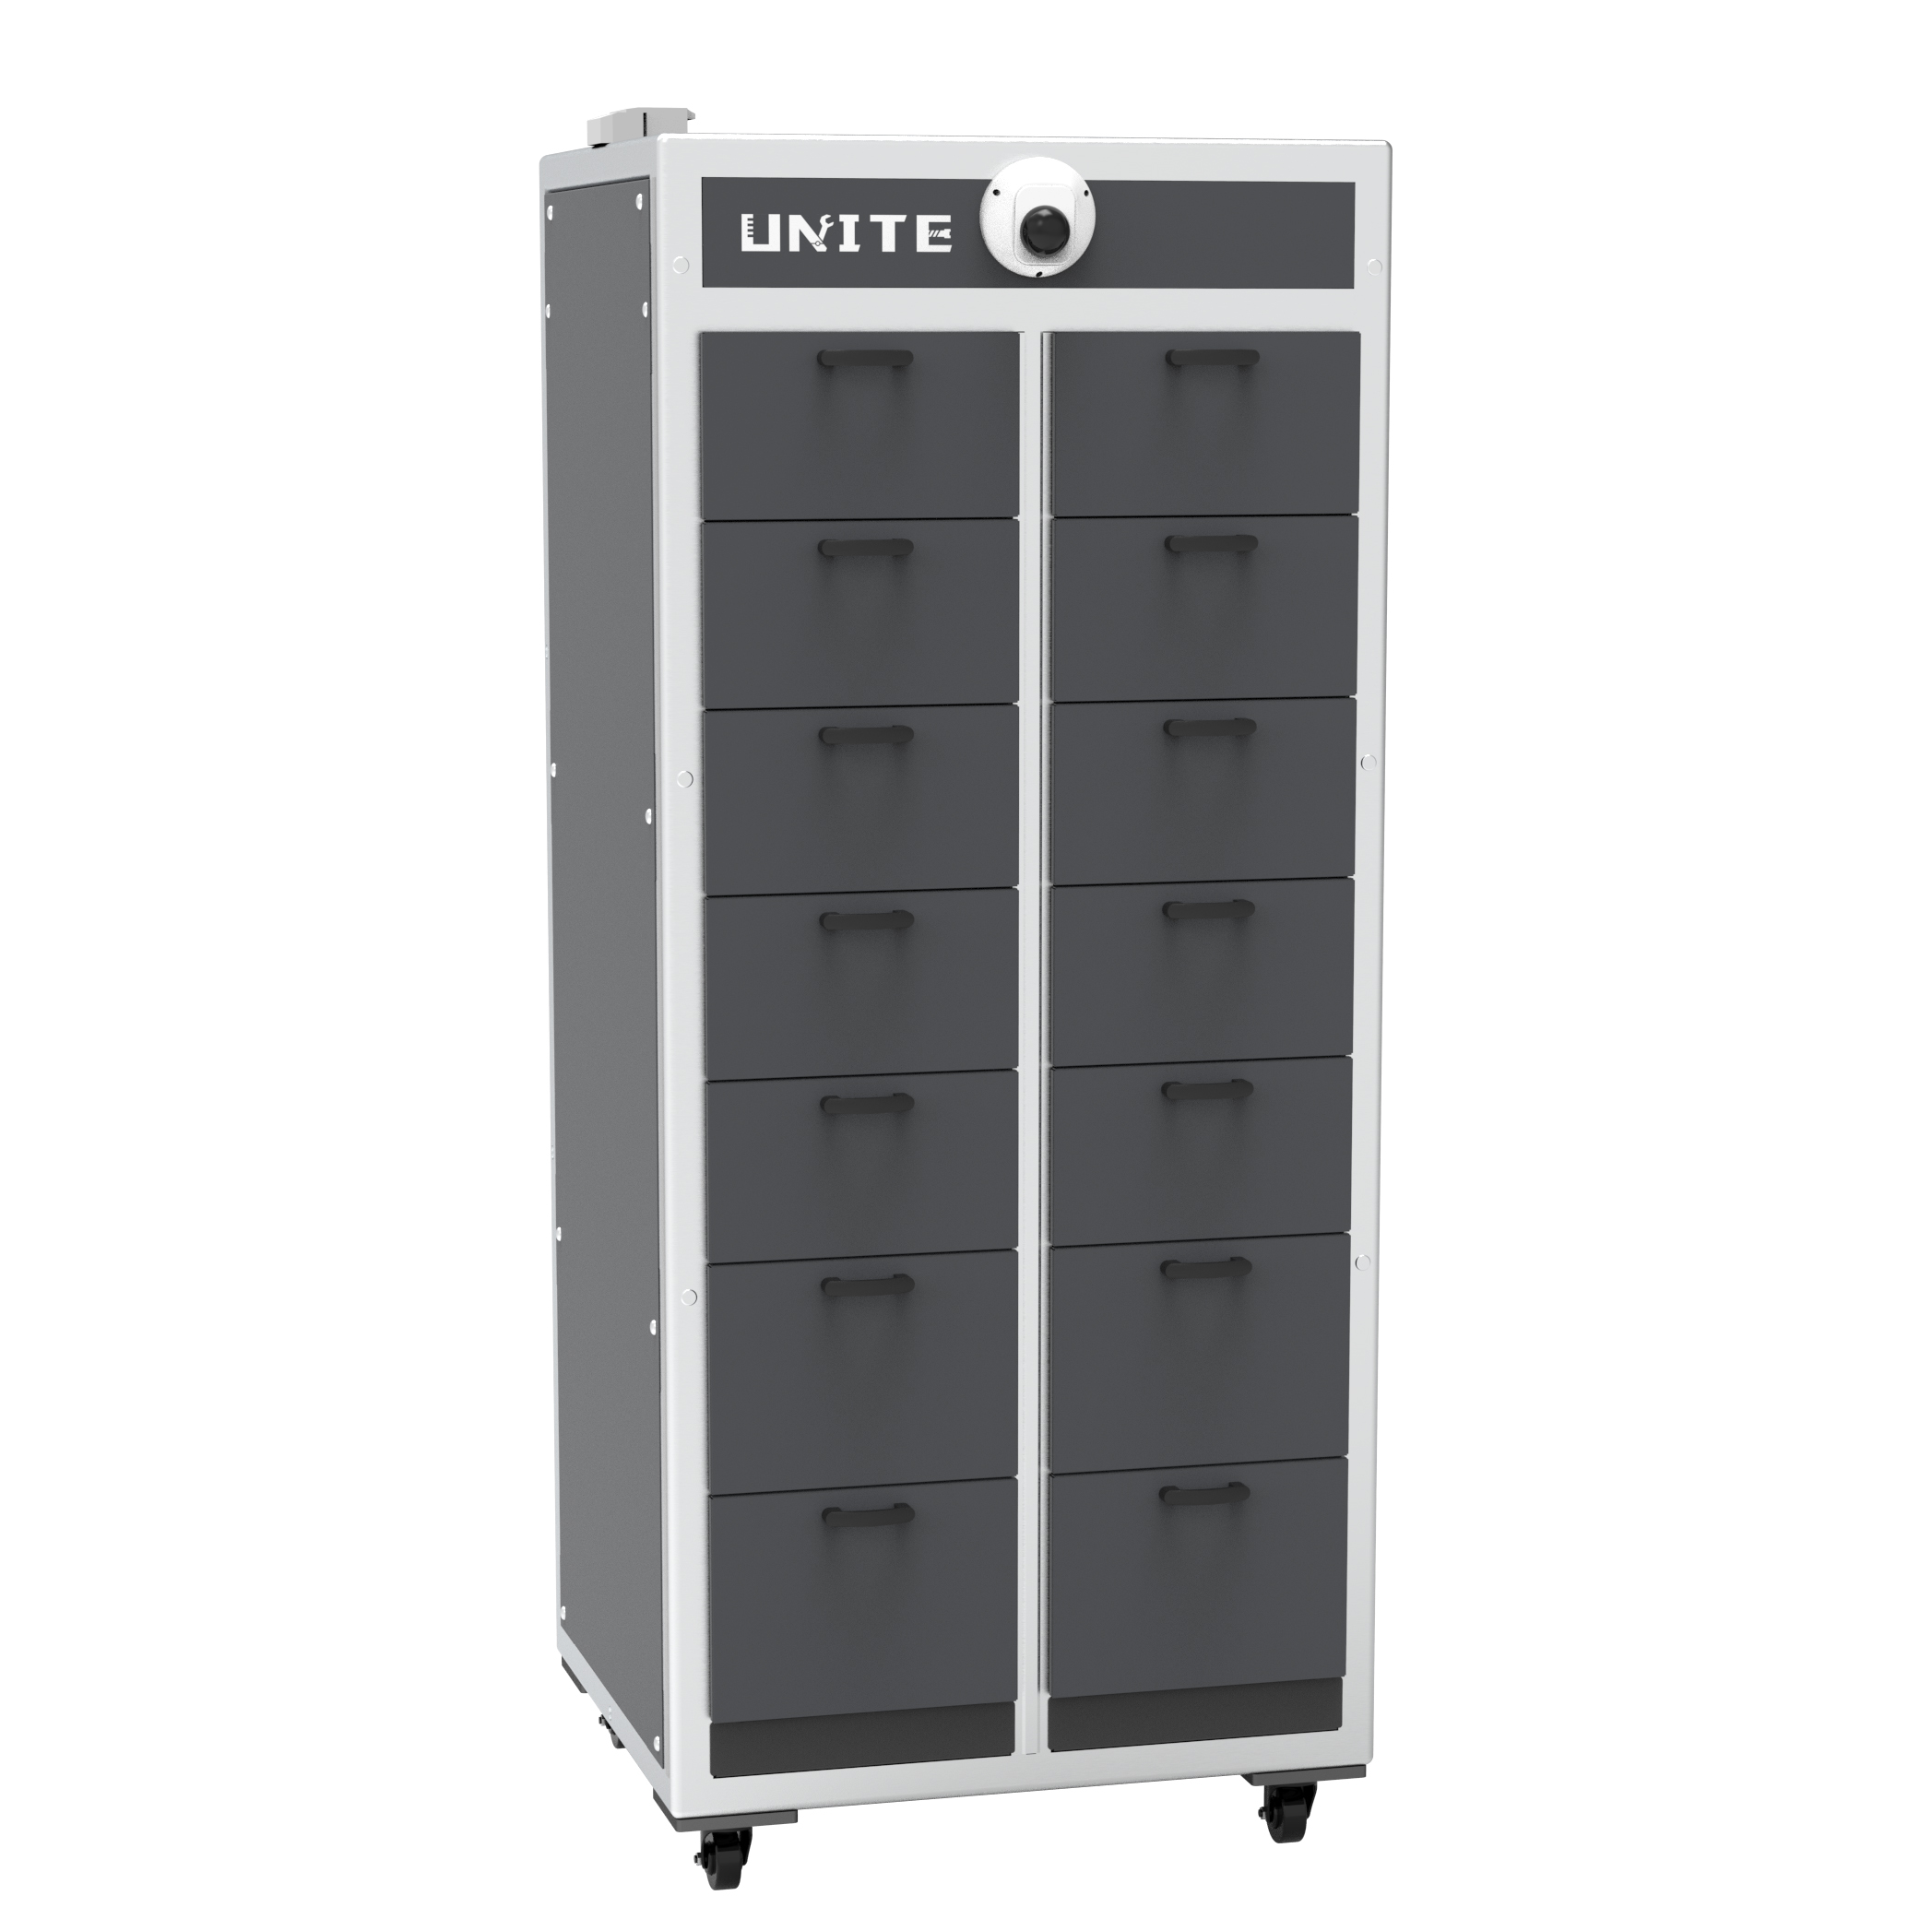 Unite Usample V1.1 Lab Standard Sample Management System Matrix IoT Room Temperature Storage Box for Standard Products, Drugs